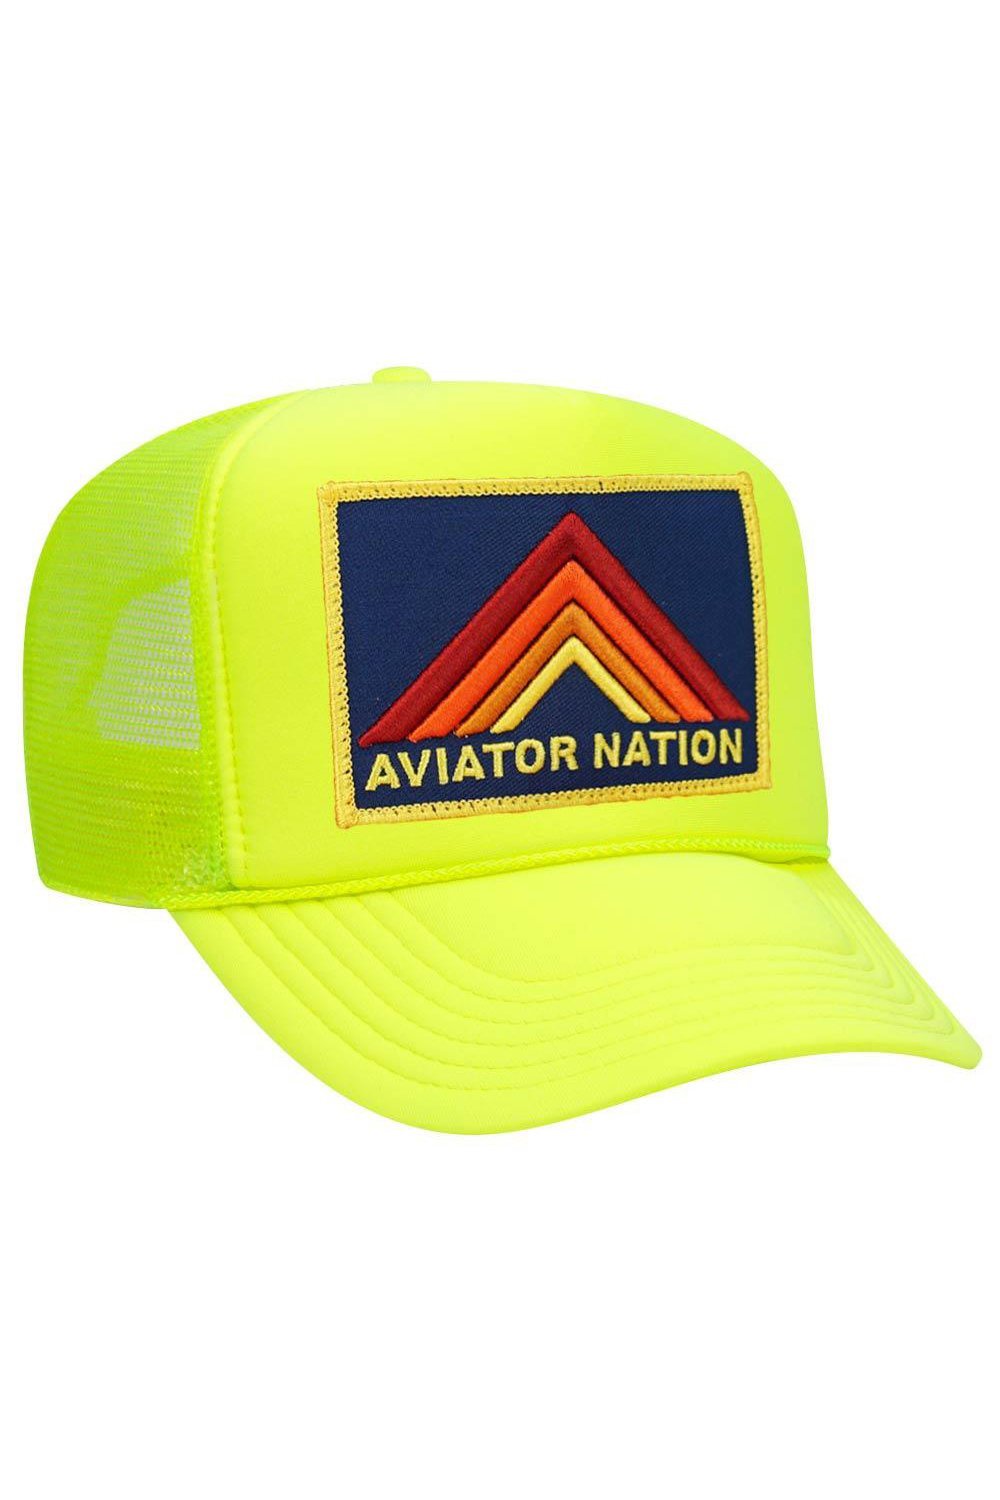 MOUNTAIN STRIPE VINTAGE TRUCKER HAT HATS Aviator Nation OS NEON YELLOW 